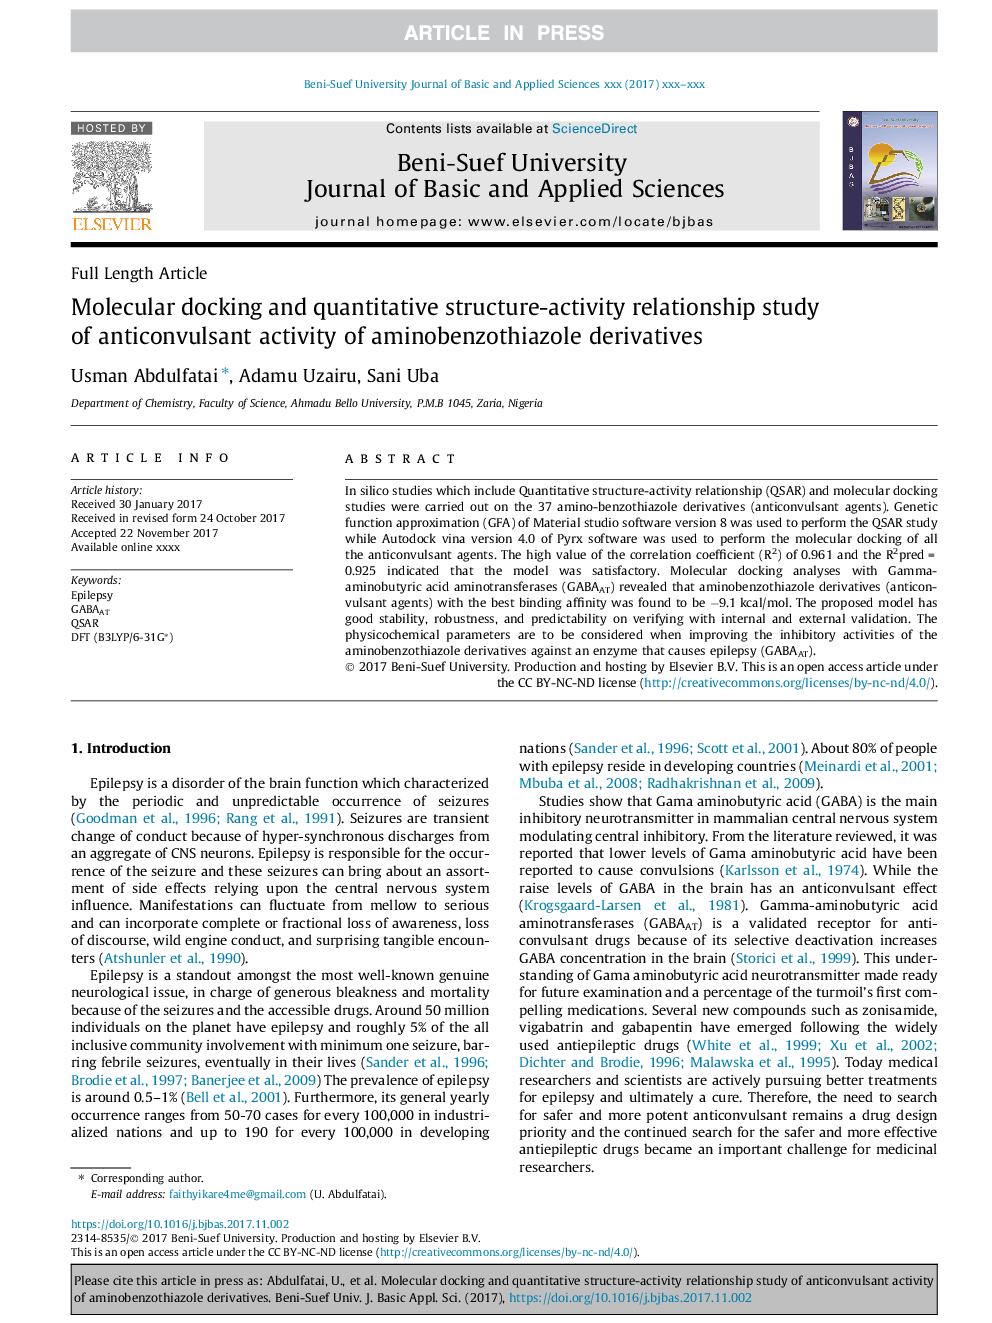 Molecular docking and quantitative structure-activity relationship study of anticonvulsant activity of aminobenzothiazole derivatives